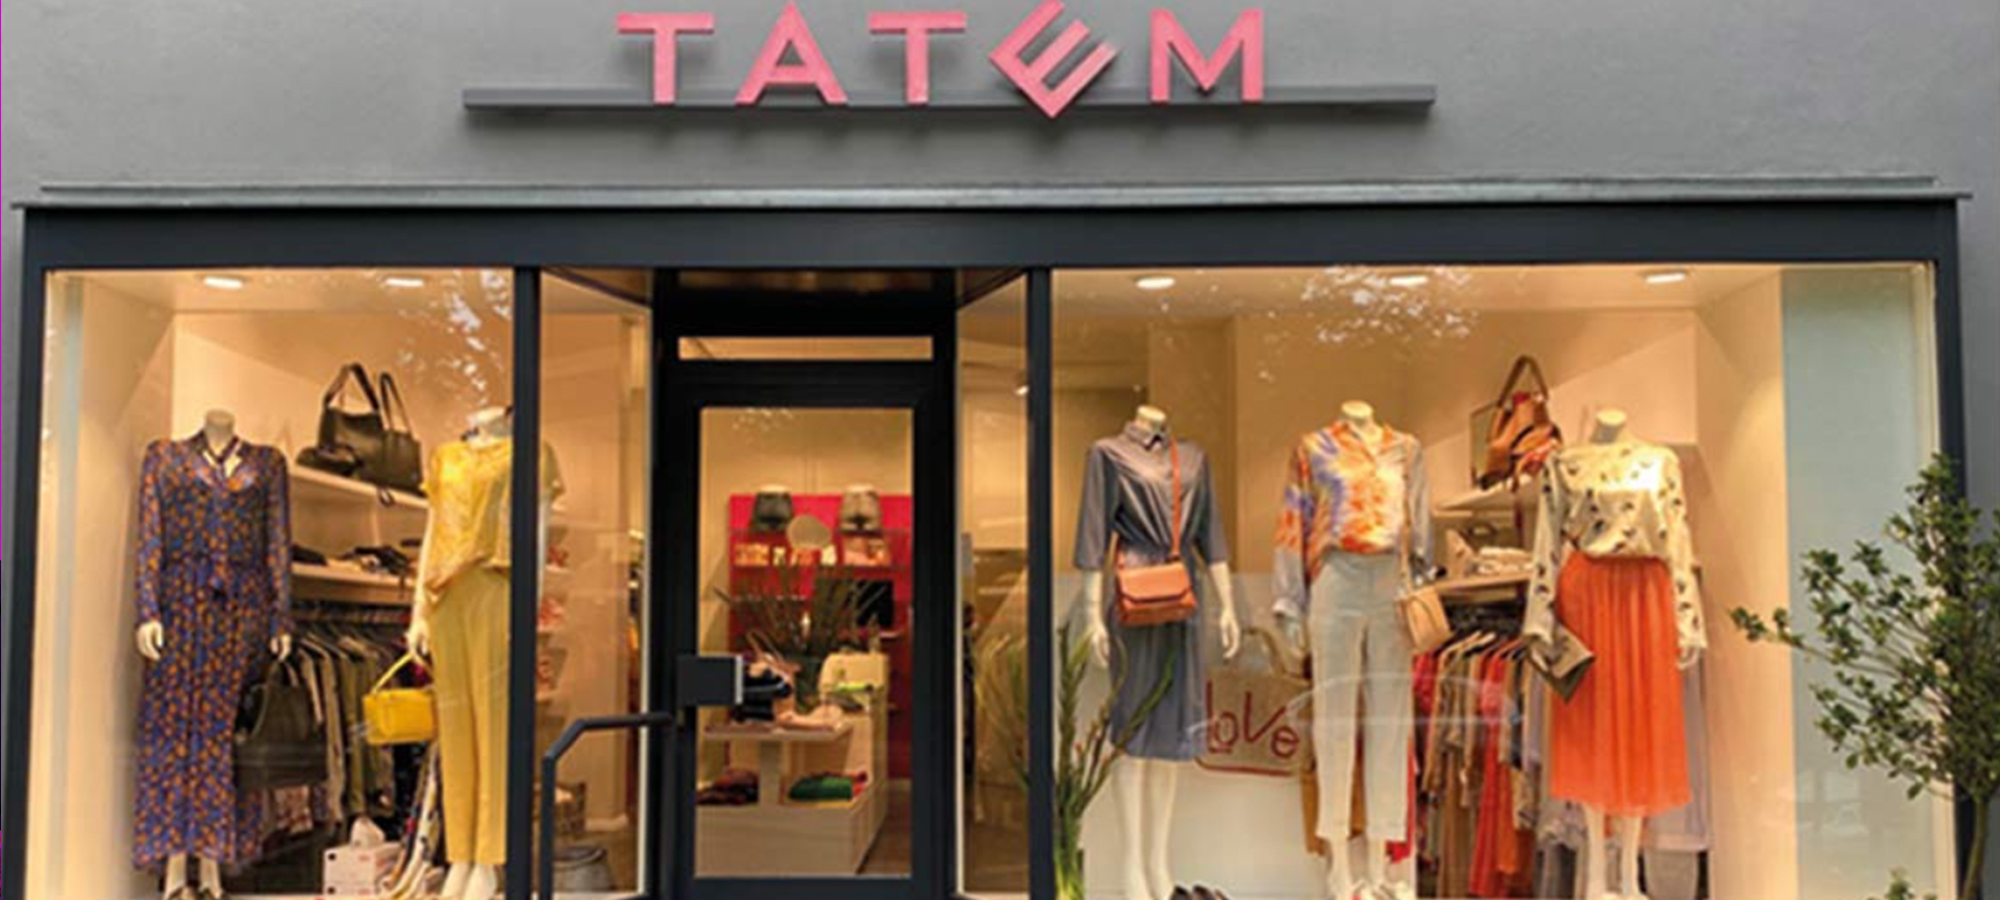 Meet the Buyers at Modefabriek: Tatem uit Berlijn